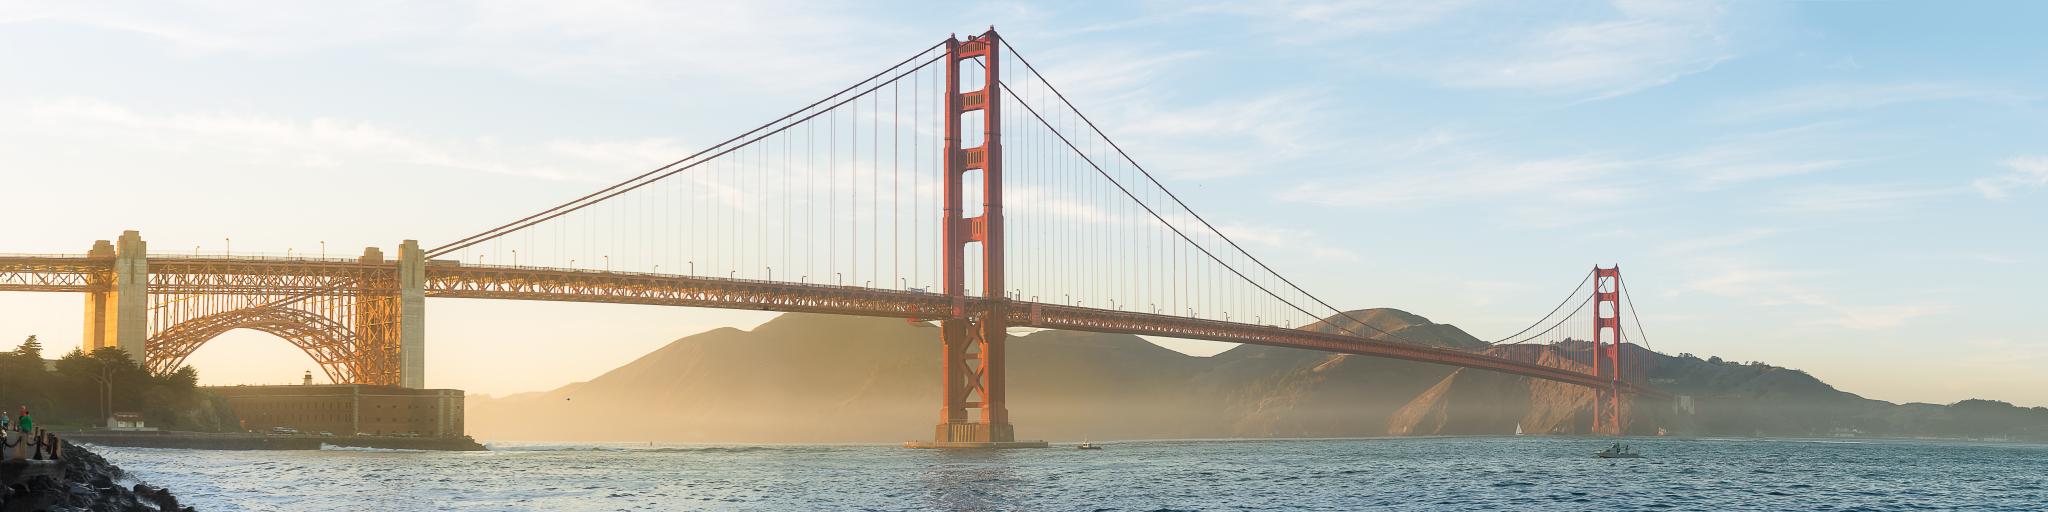 San Francisco Golden Gate Bridge panorama from a distance